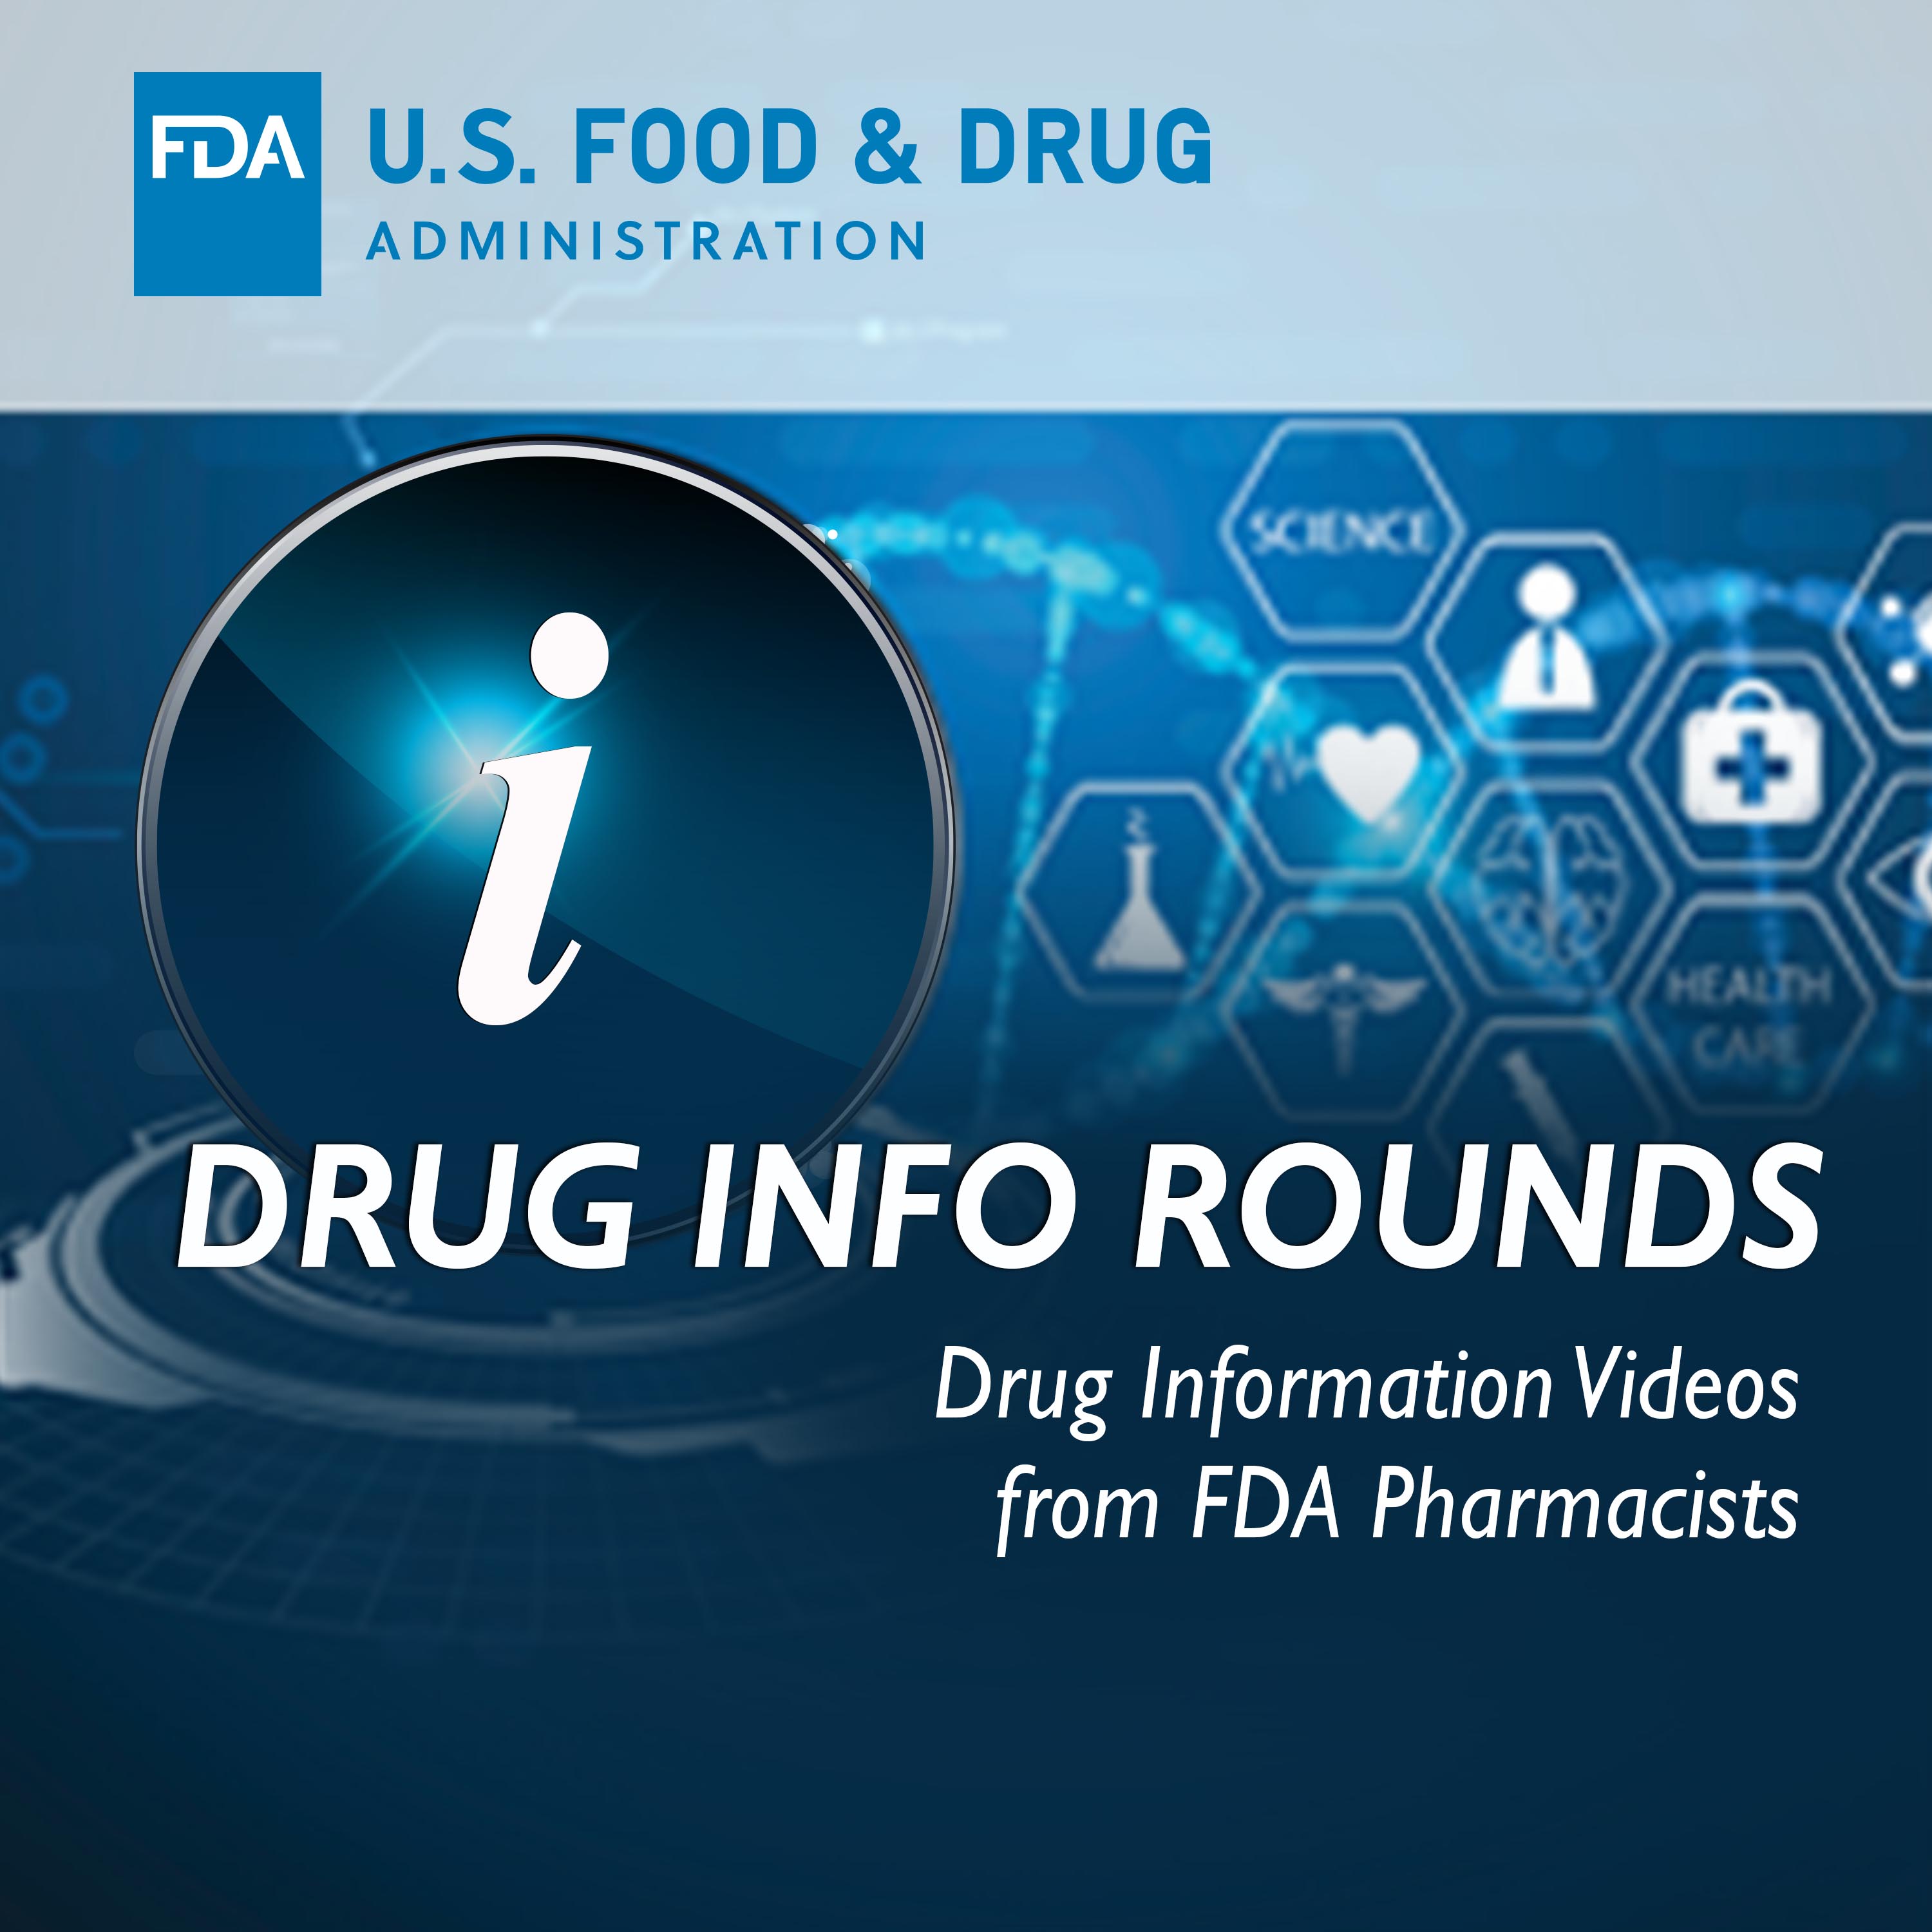 FDA Drug Info Rounds cover art